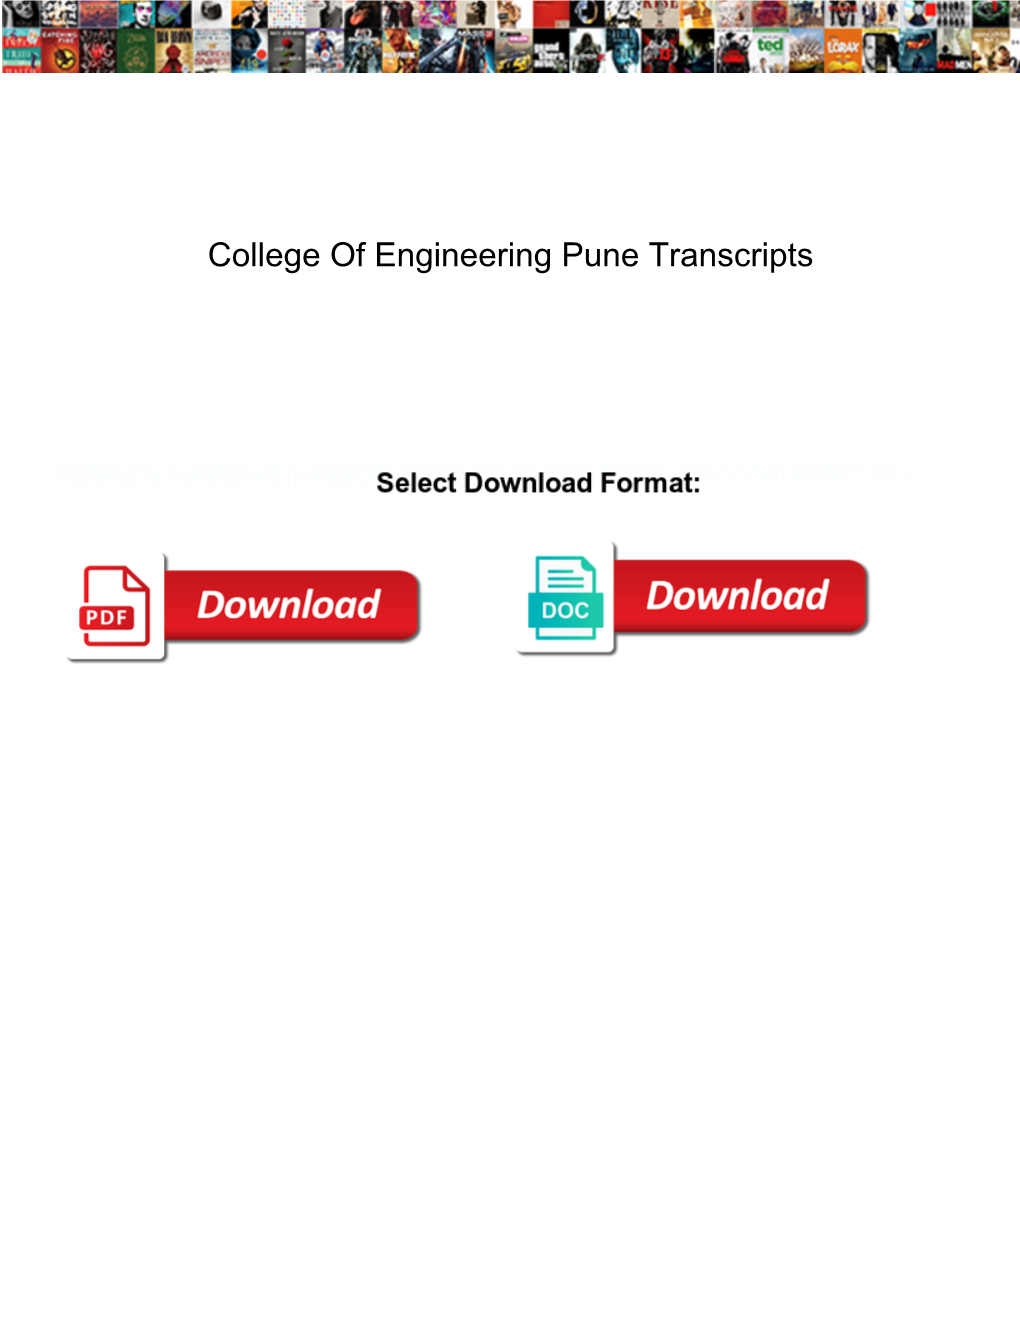 College of Engineering Pune Transcripts